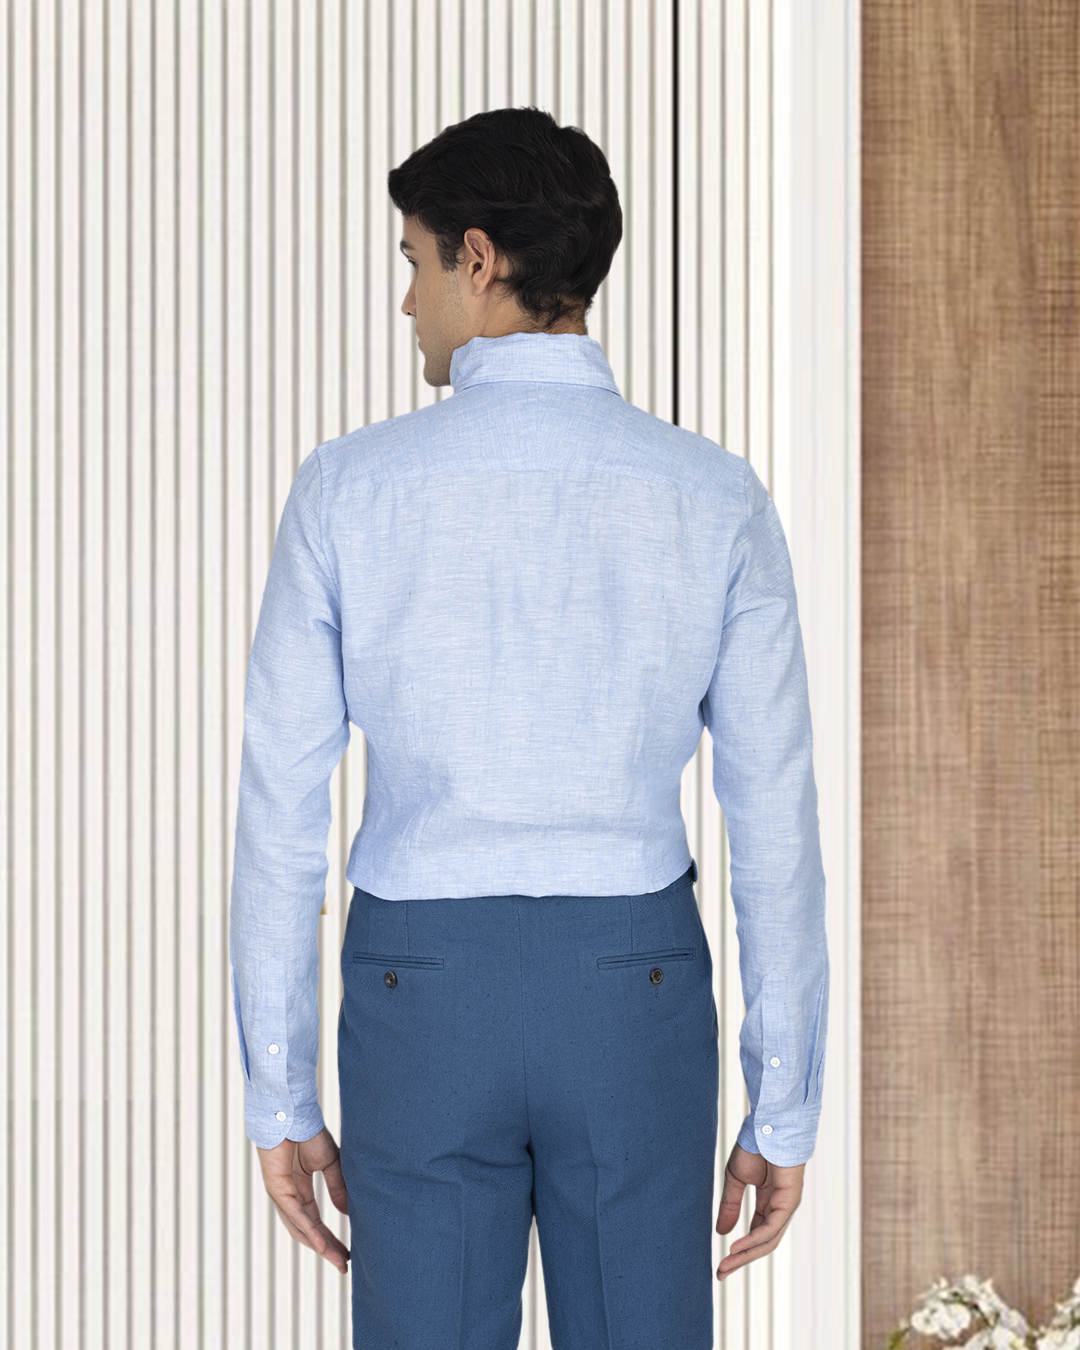 Linen Cotton: Light Blue Chambray one piece collar placket